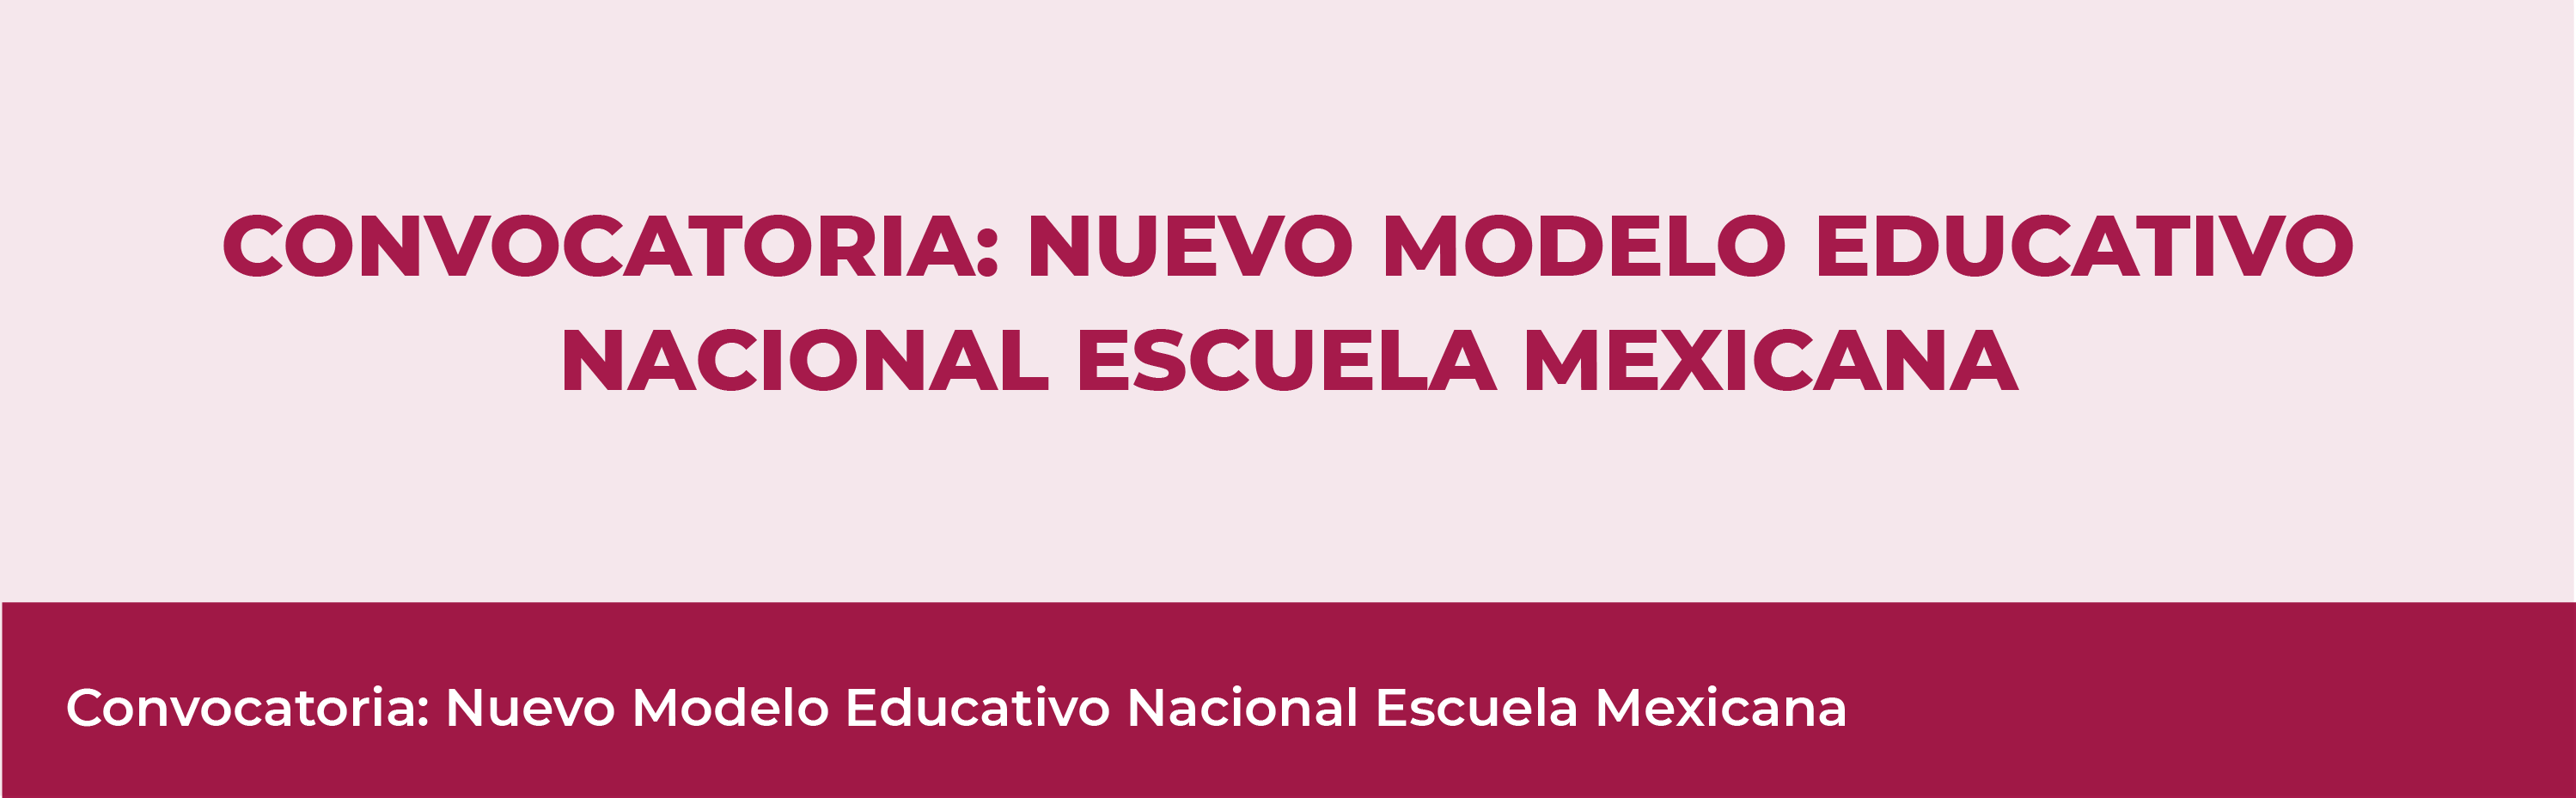 CONVOCATORIA: Nuevo modelo Educativo Nacional Escuela Mexicana